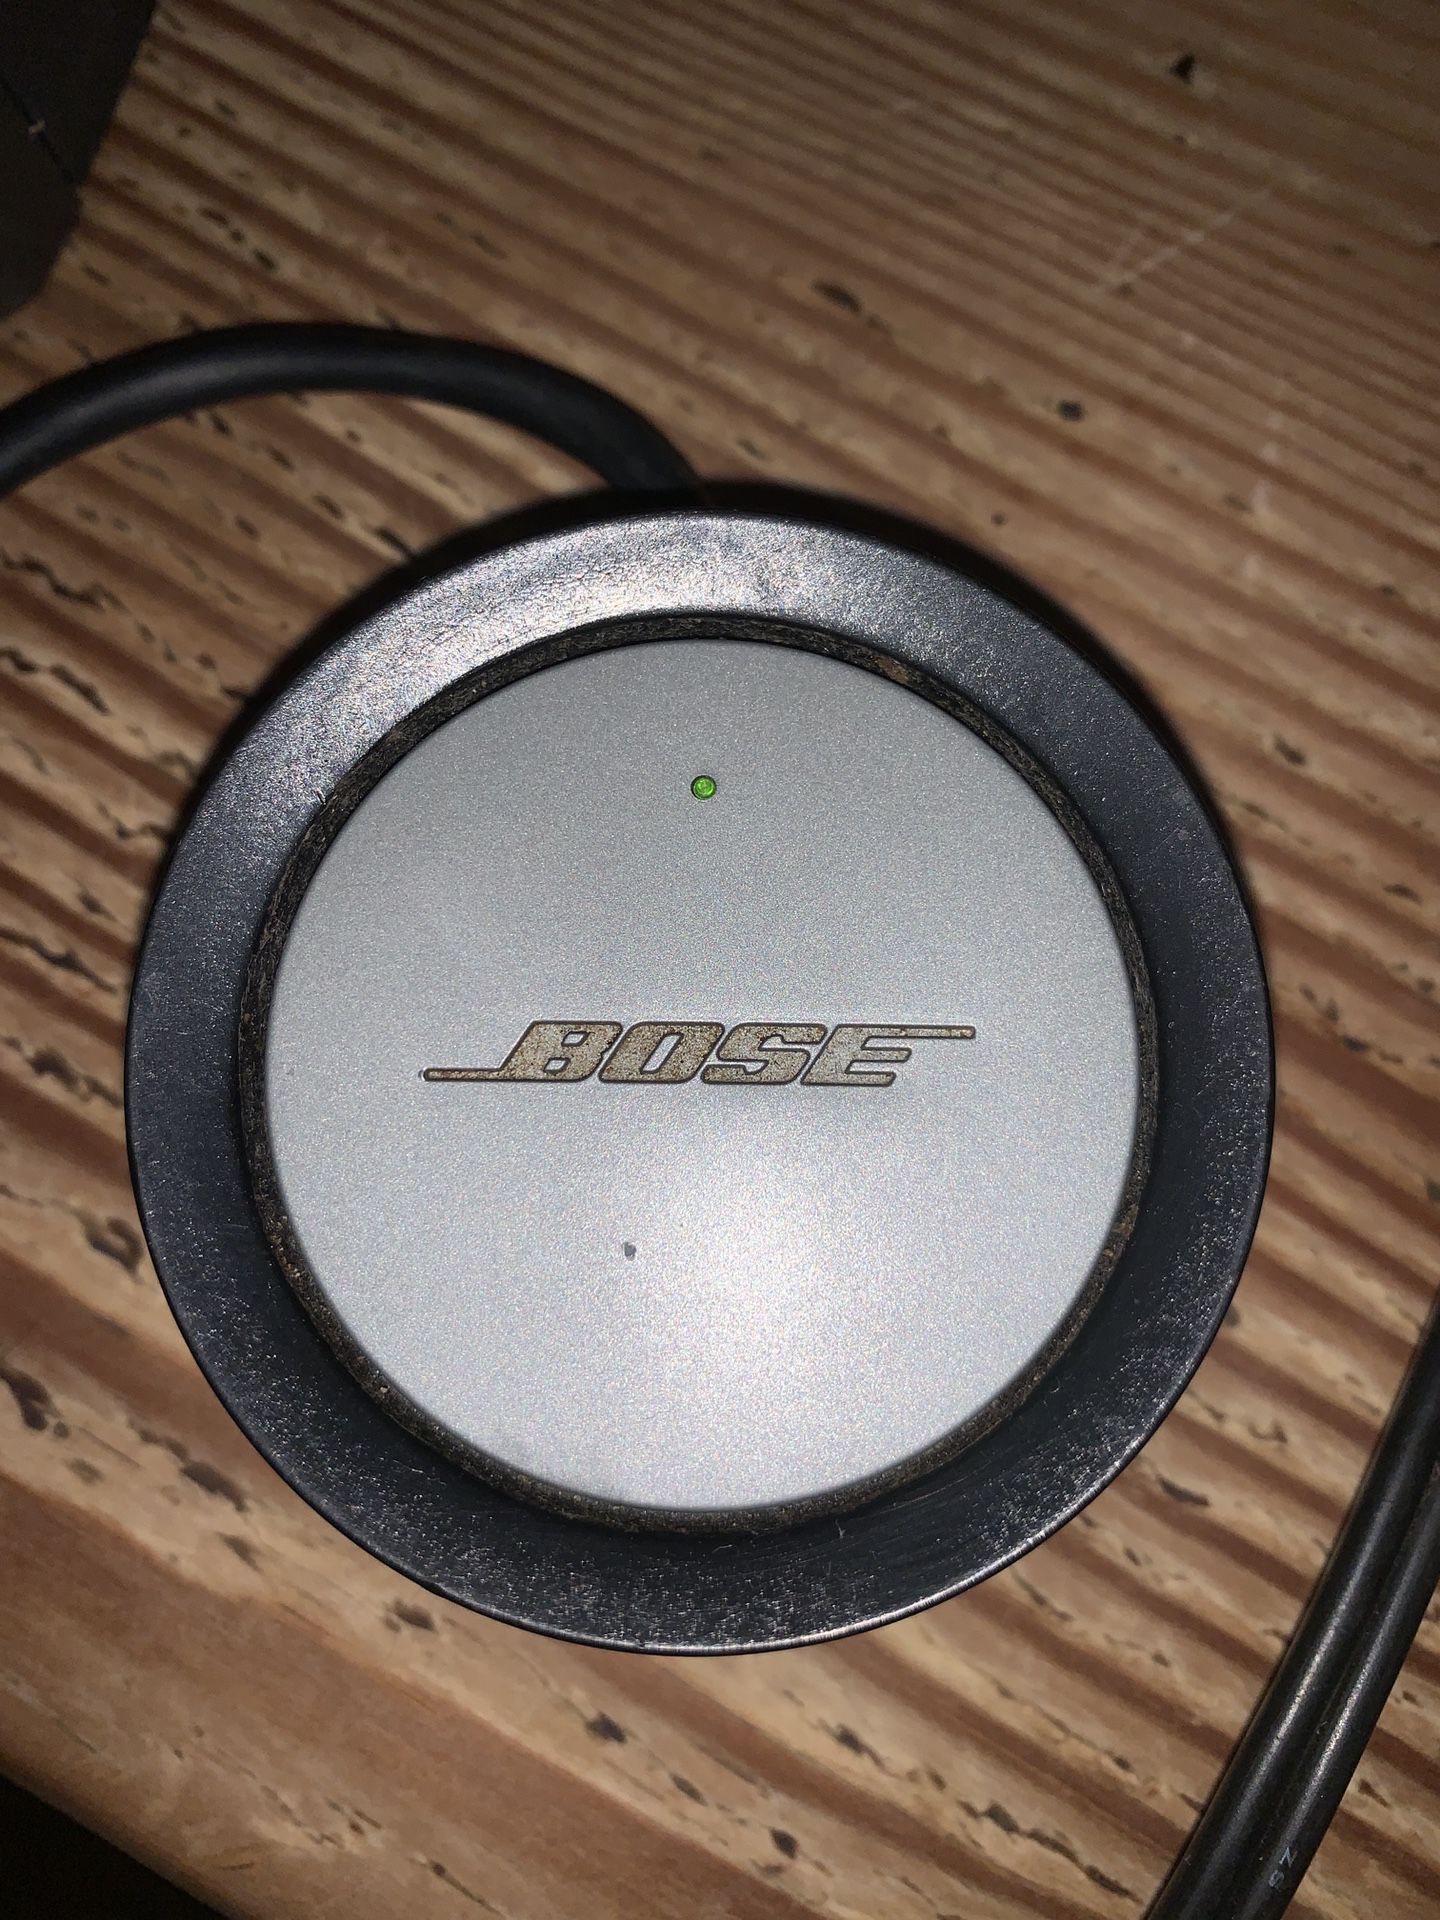 Bose Companion 3 Series II computer speakers